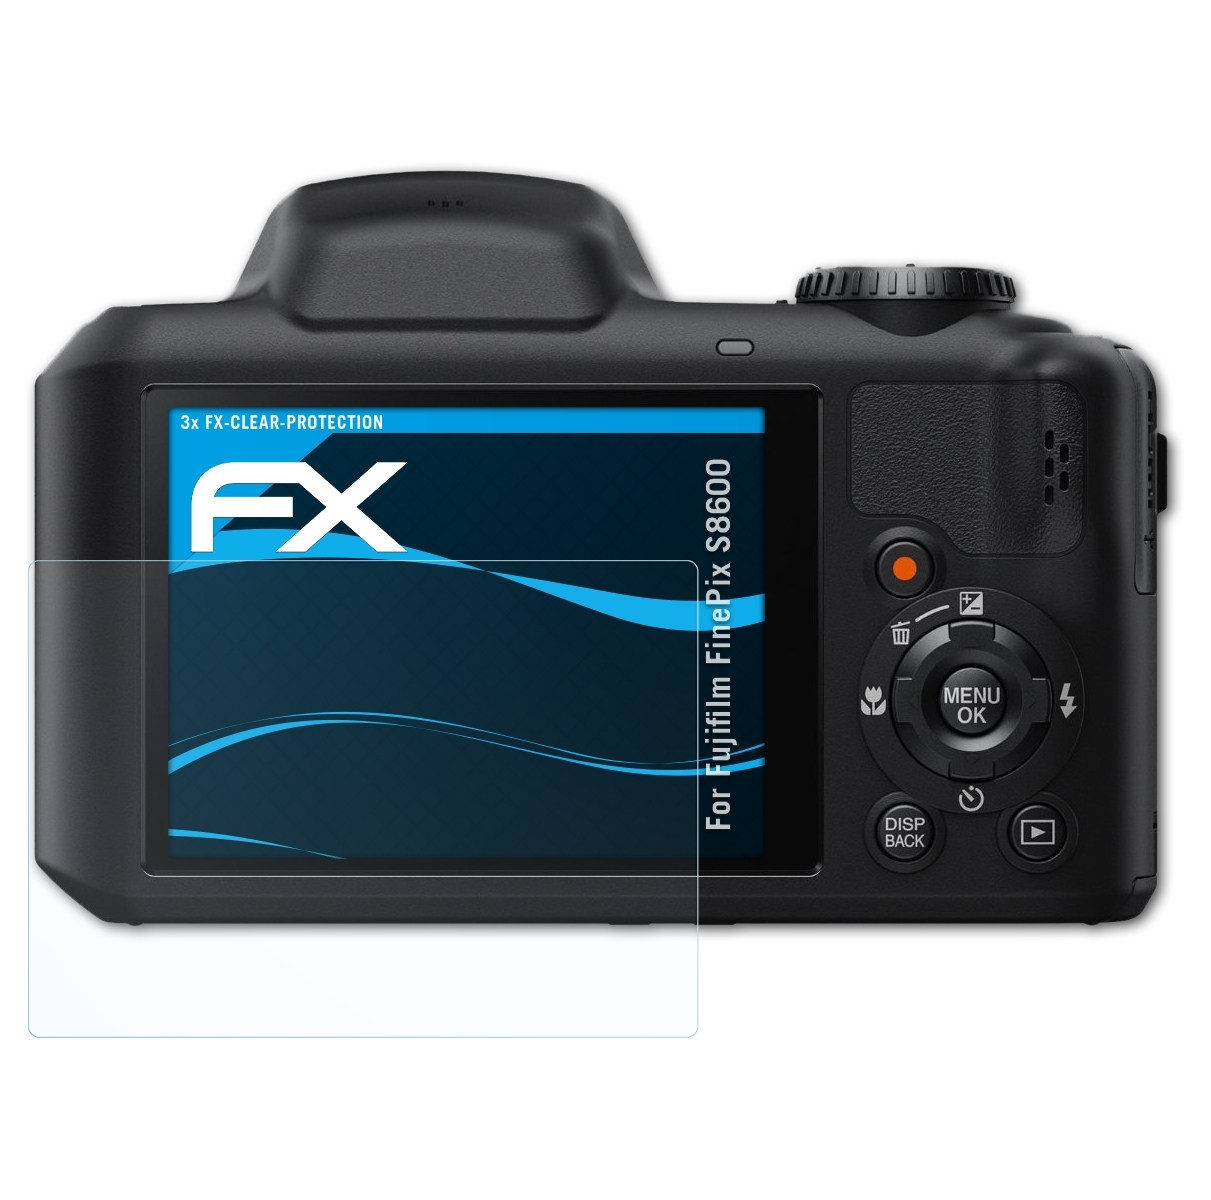 FinePix S8600) FX-Clear Fujifilm Displayschutz(für ATFOLIX 3x